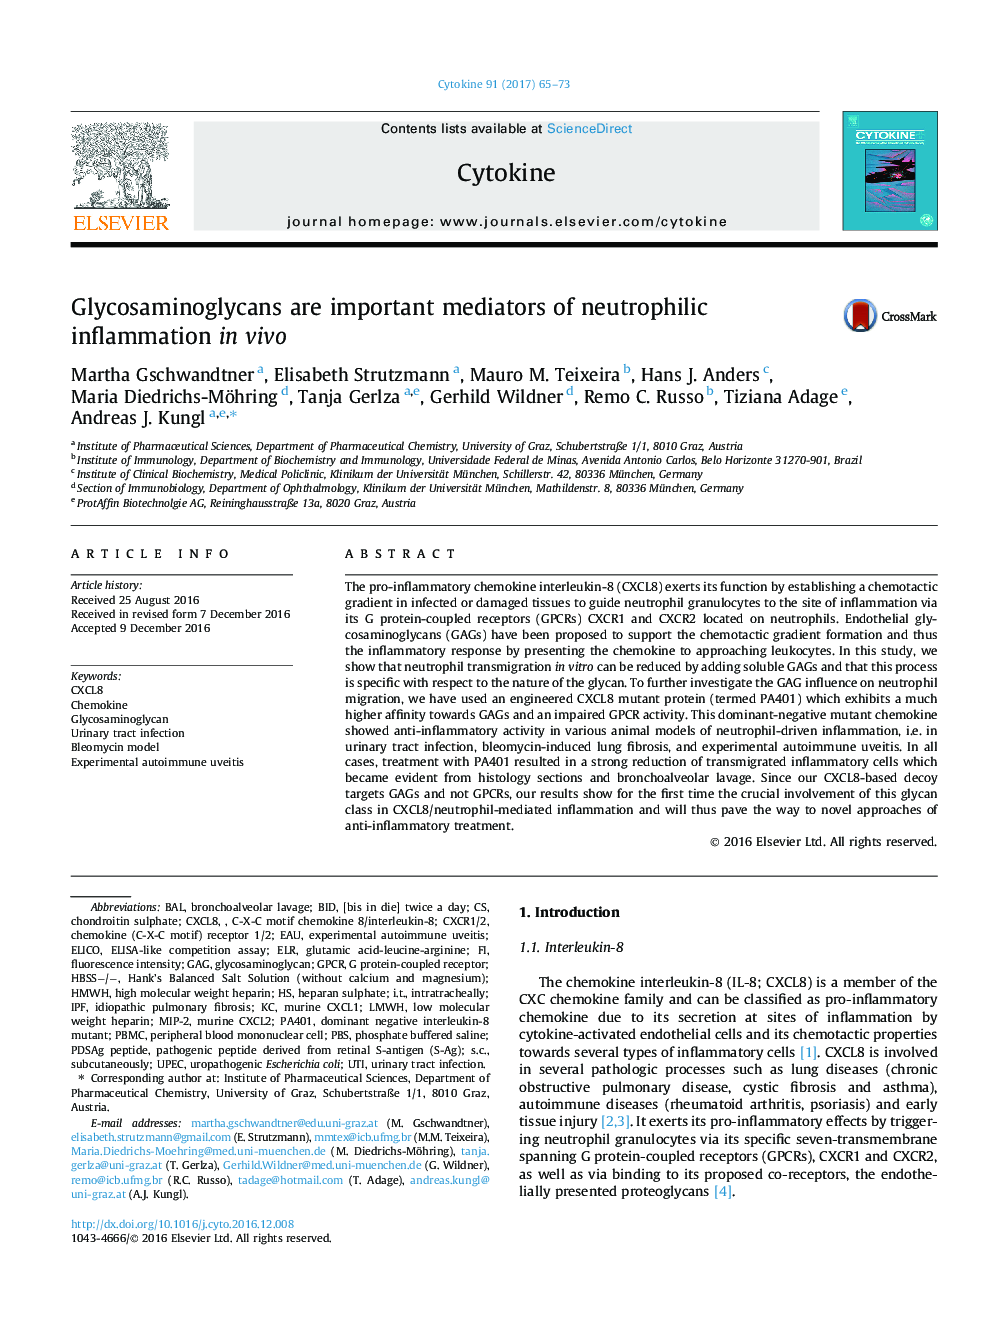 Glycosaminoglycans are important mediators of neutrophilic inflammation in vivo